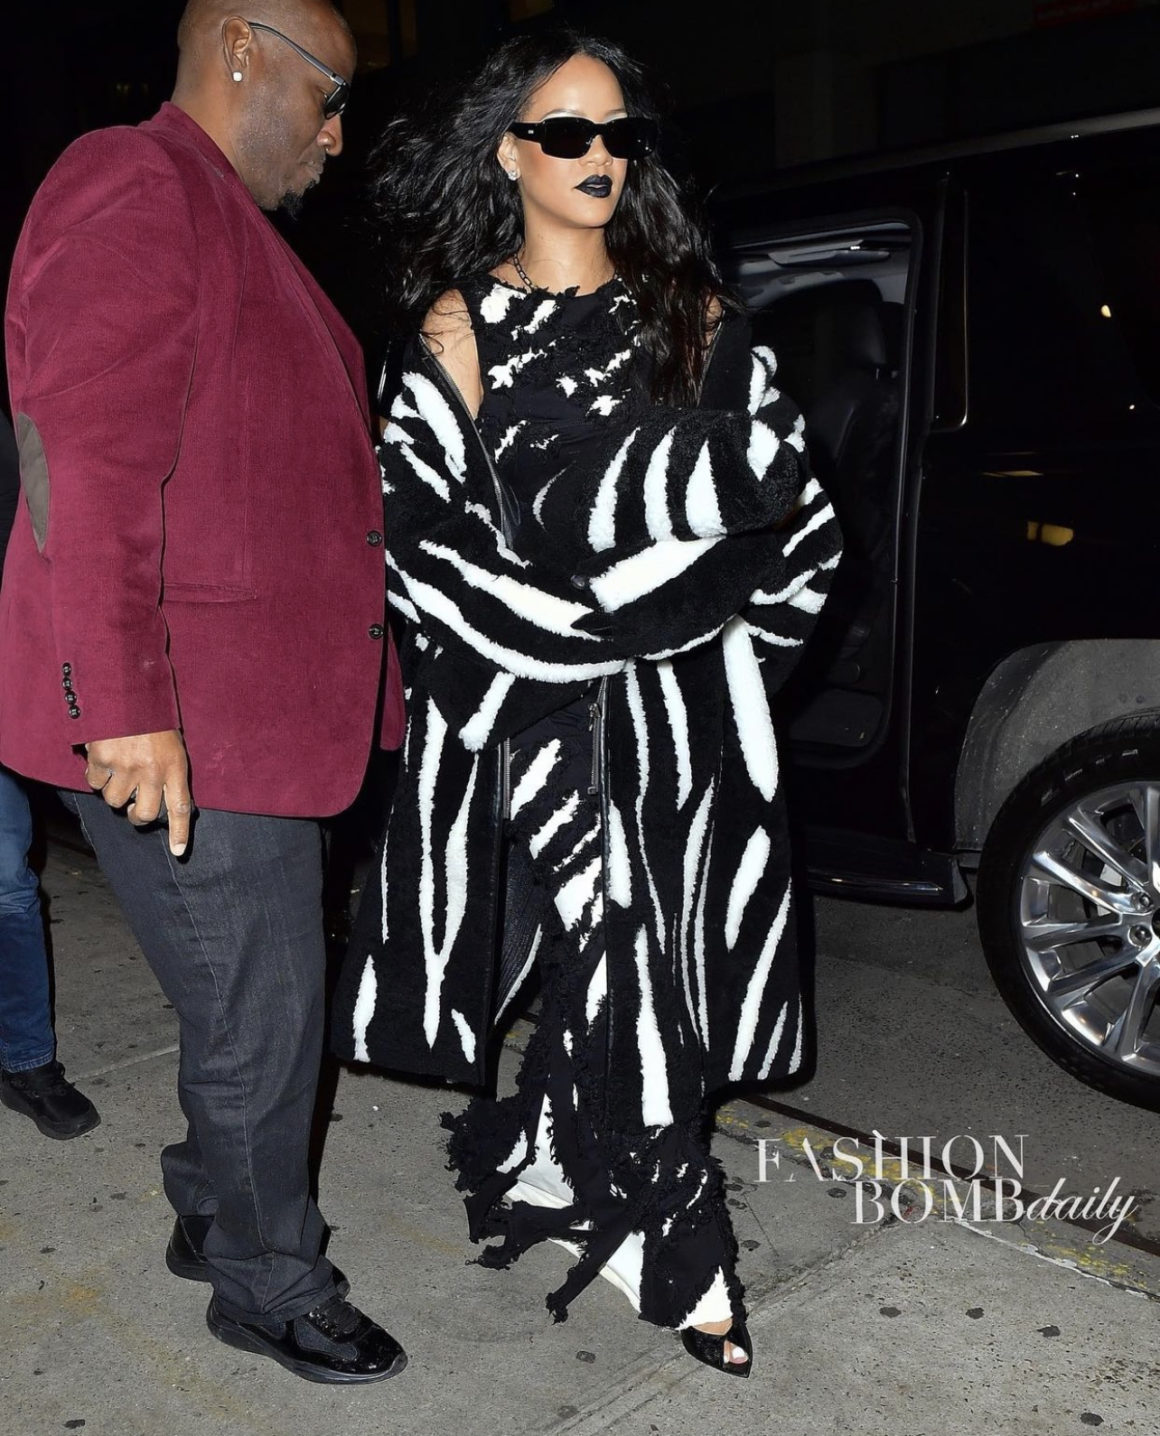 Rihanna's Halloween costume was Gunna's viral fashion week look